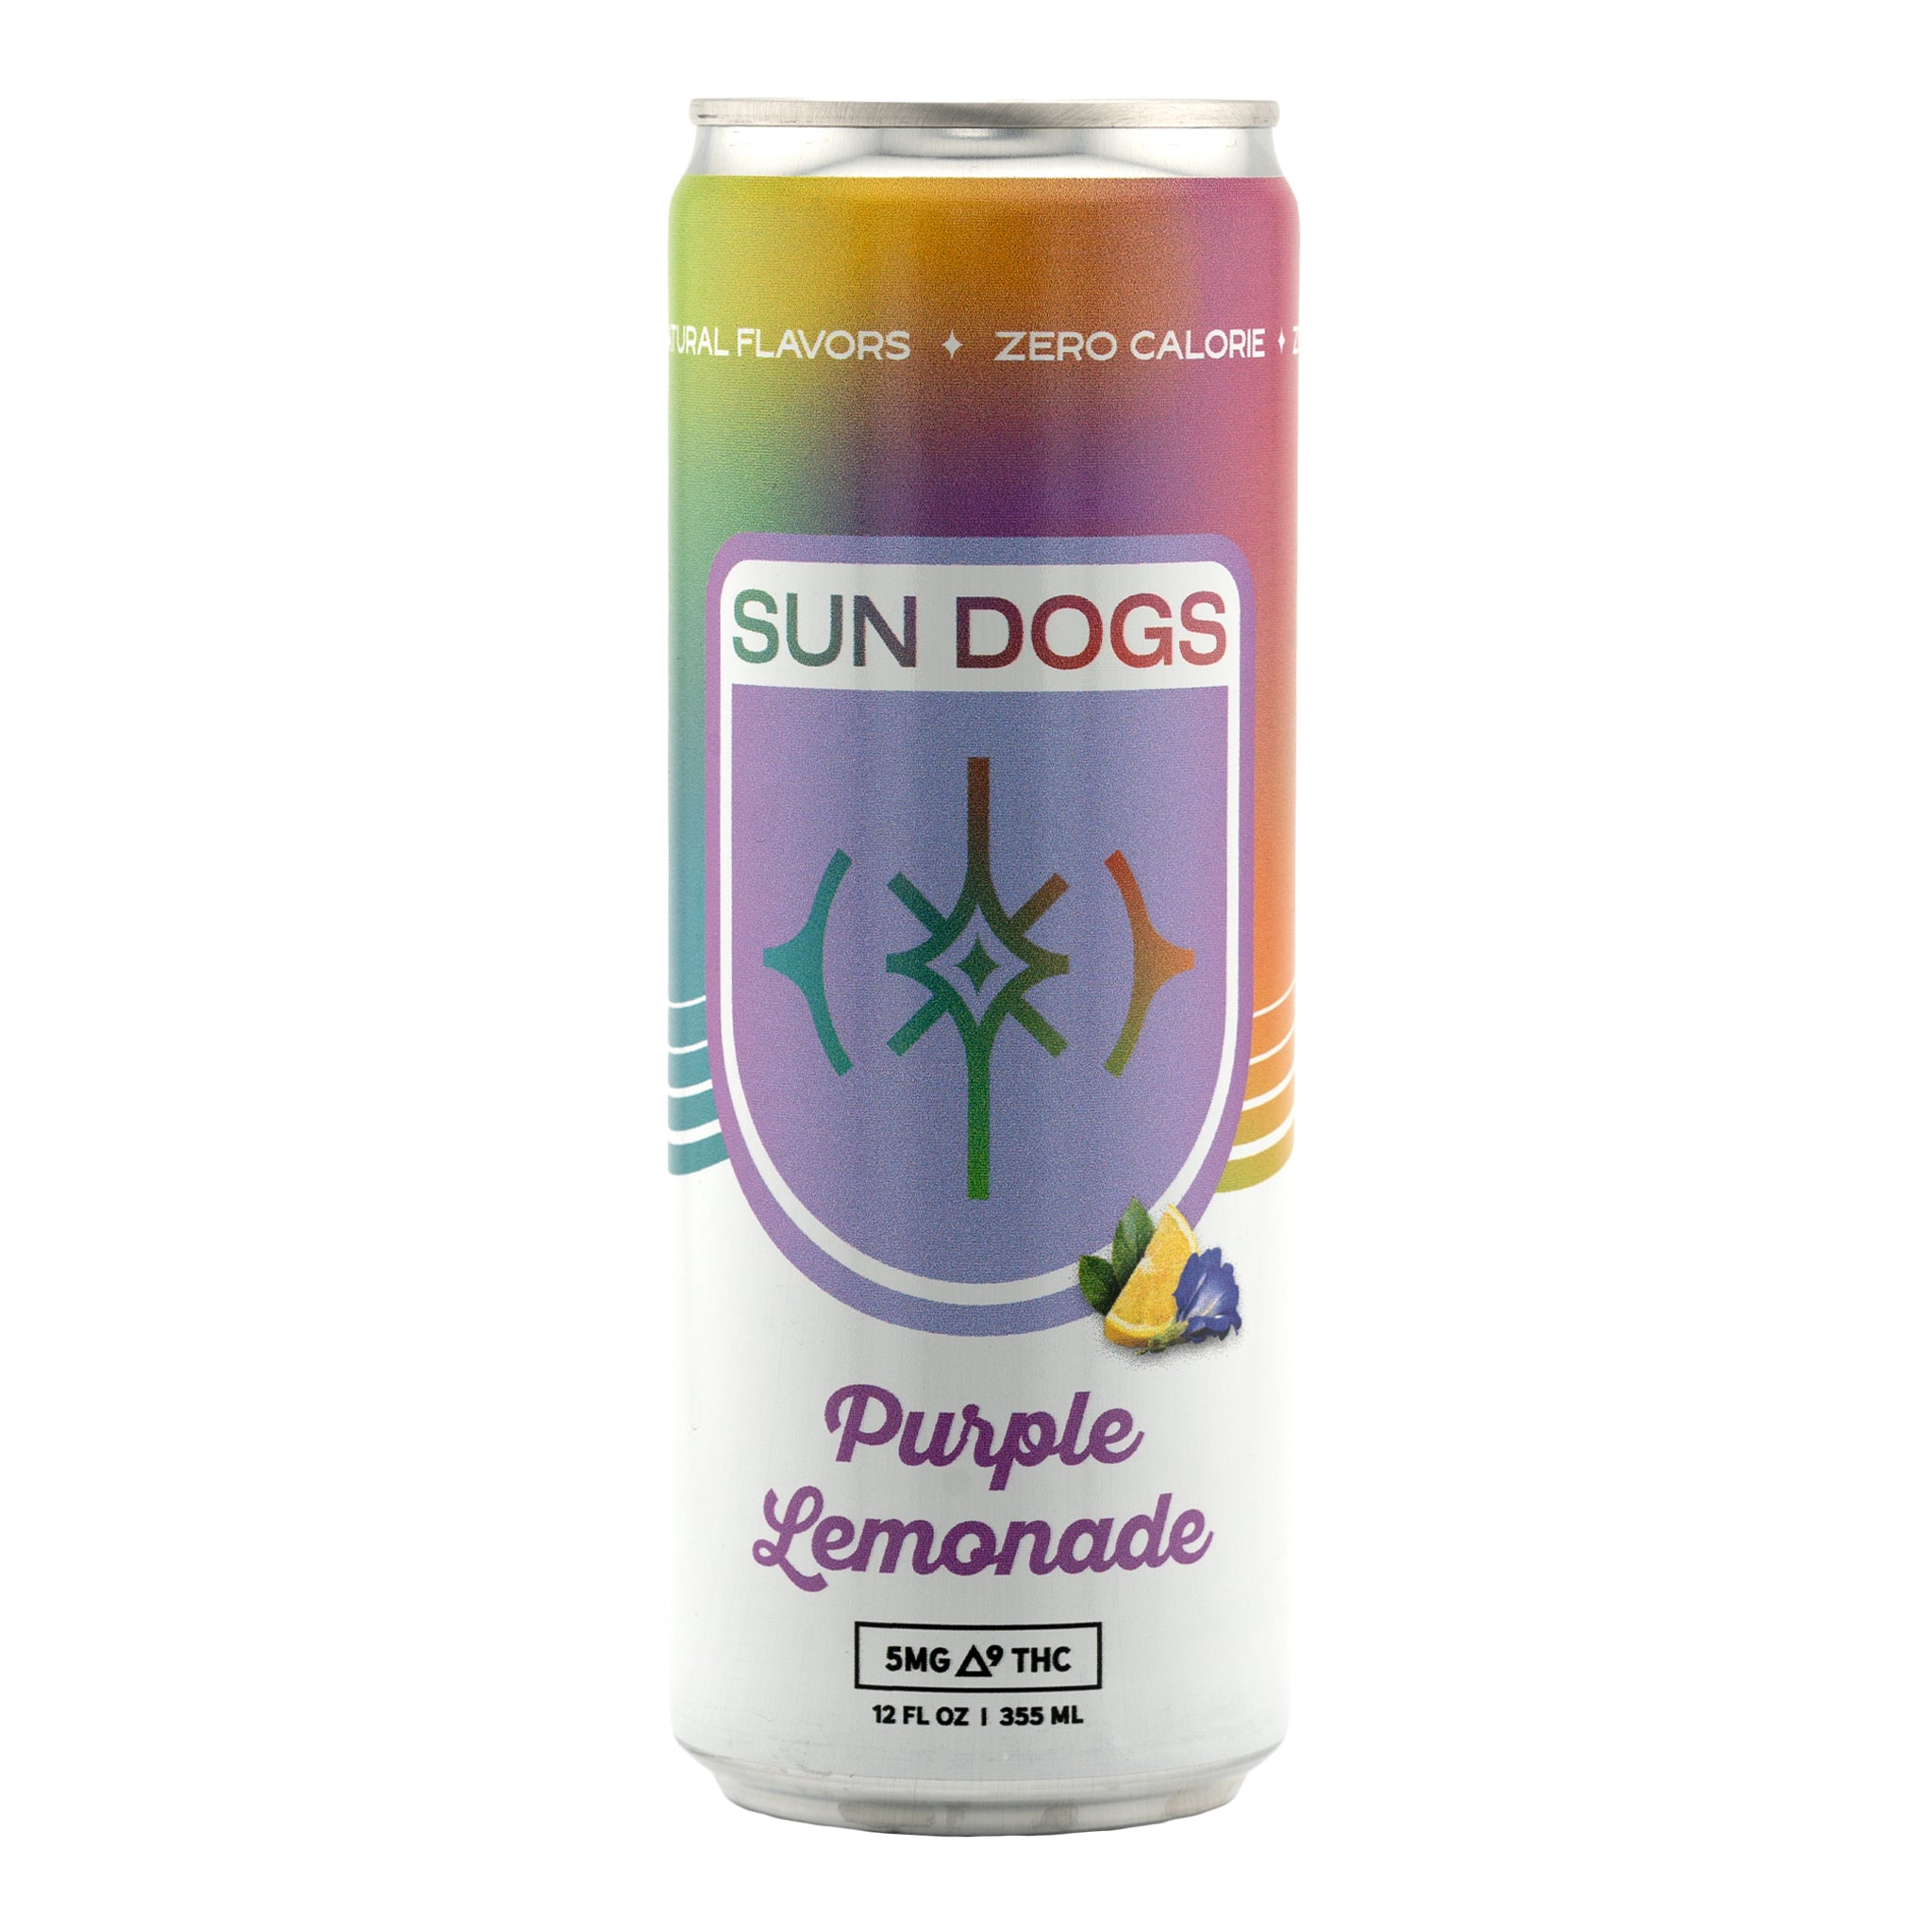 SUN DOGS (3 Flavors) 5mg THC